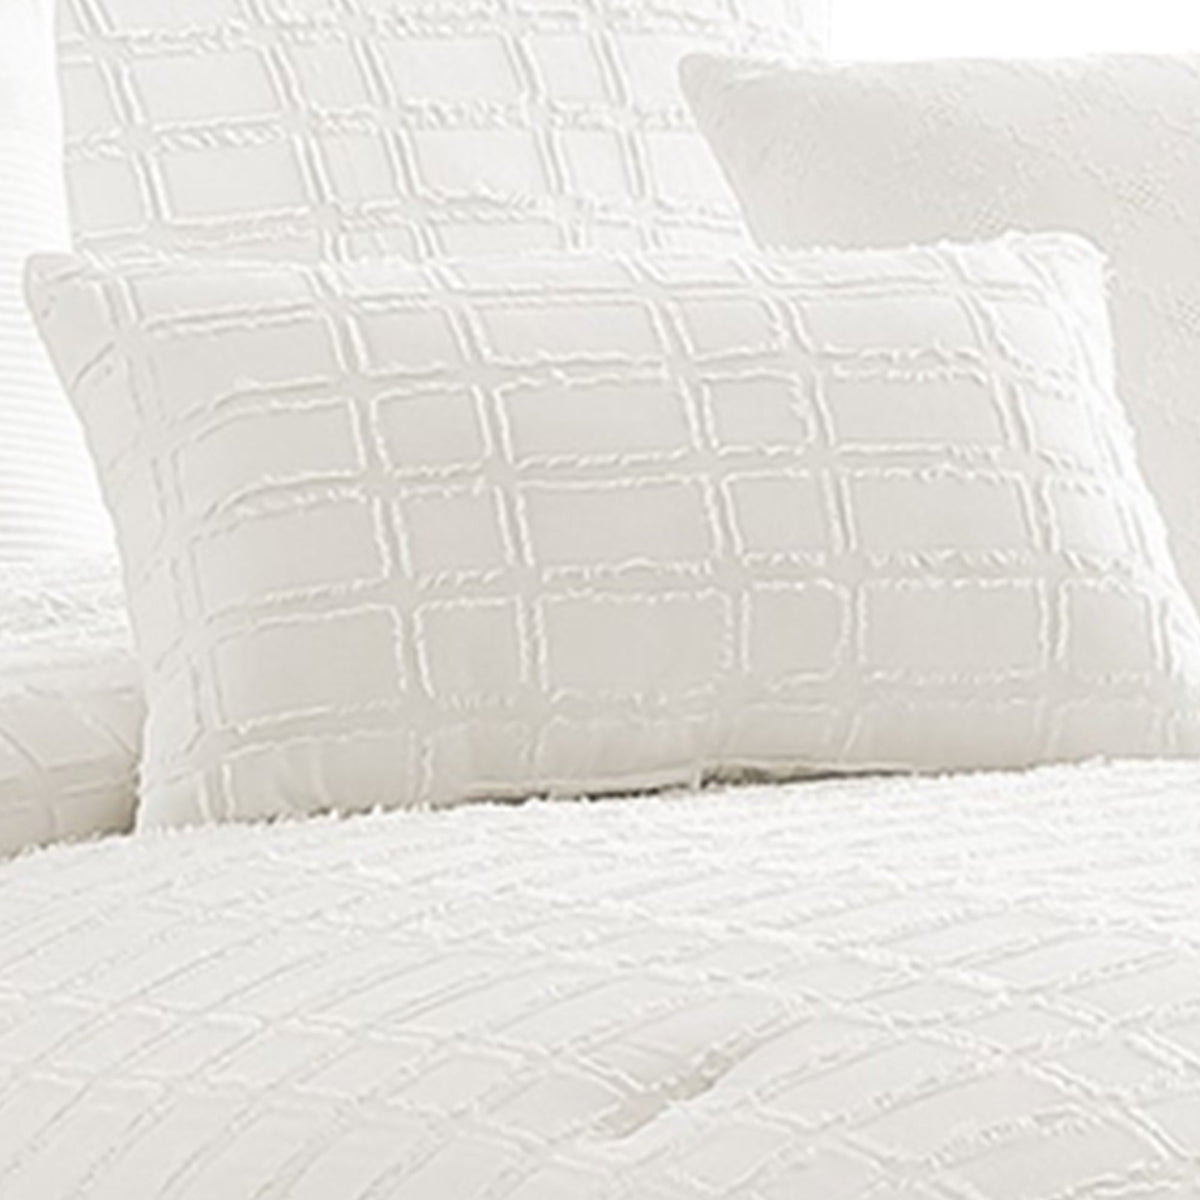 7 Piece Cotton Queen Comforter Set with Fringe Details, White - BM225178